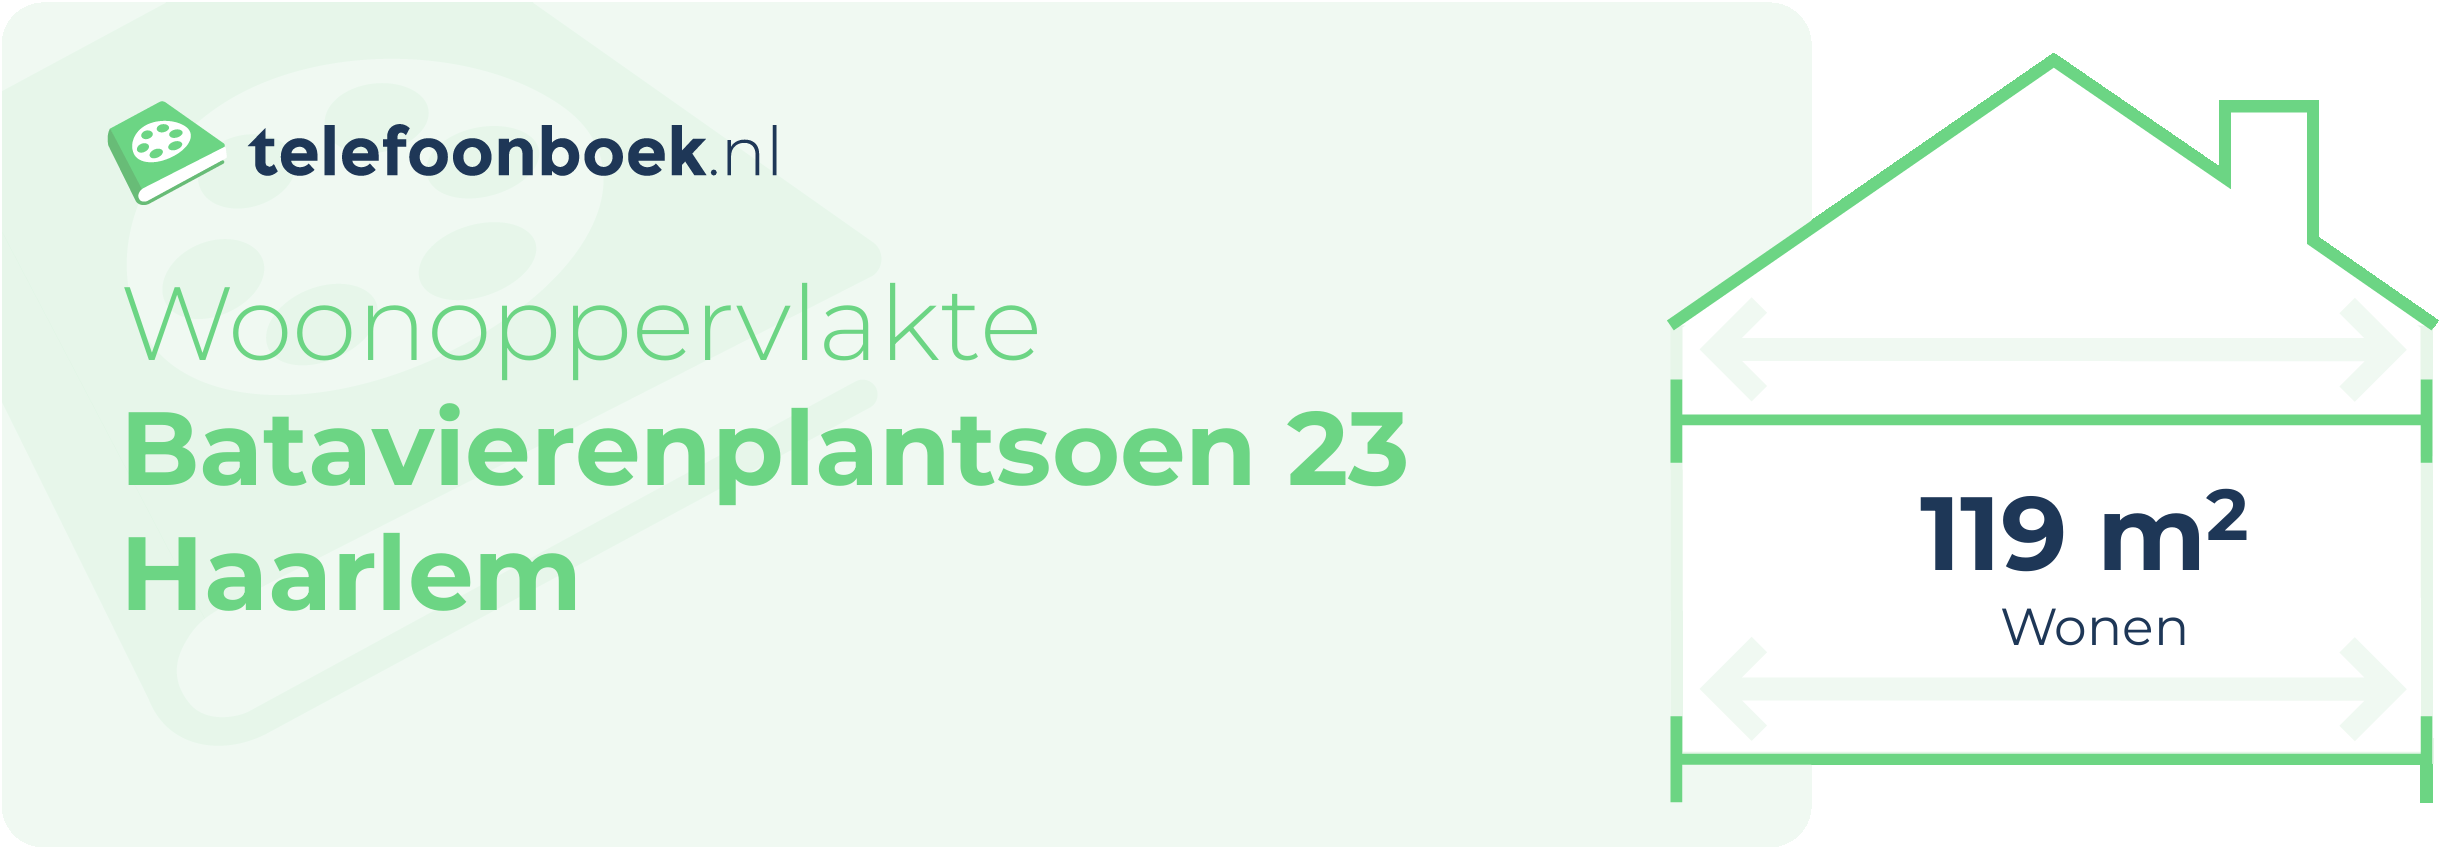 Woonoppervlakte Batavierenplantsoen 23 Haarlem